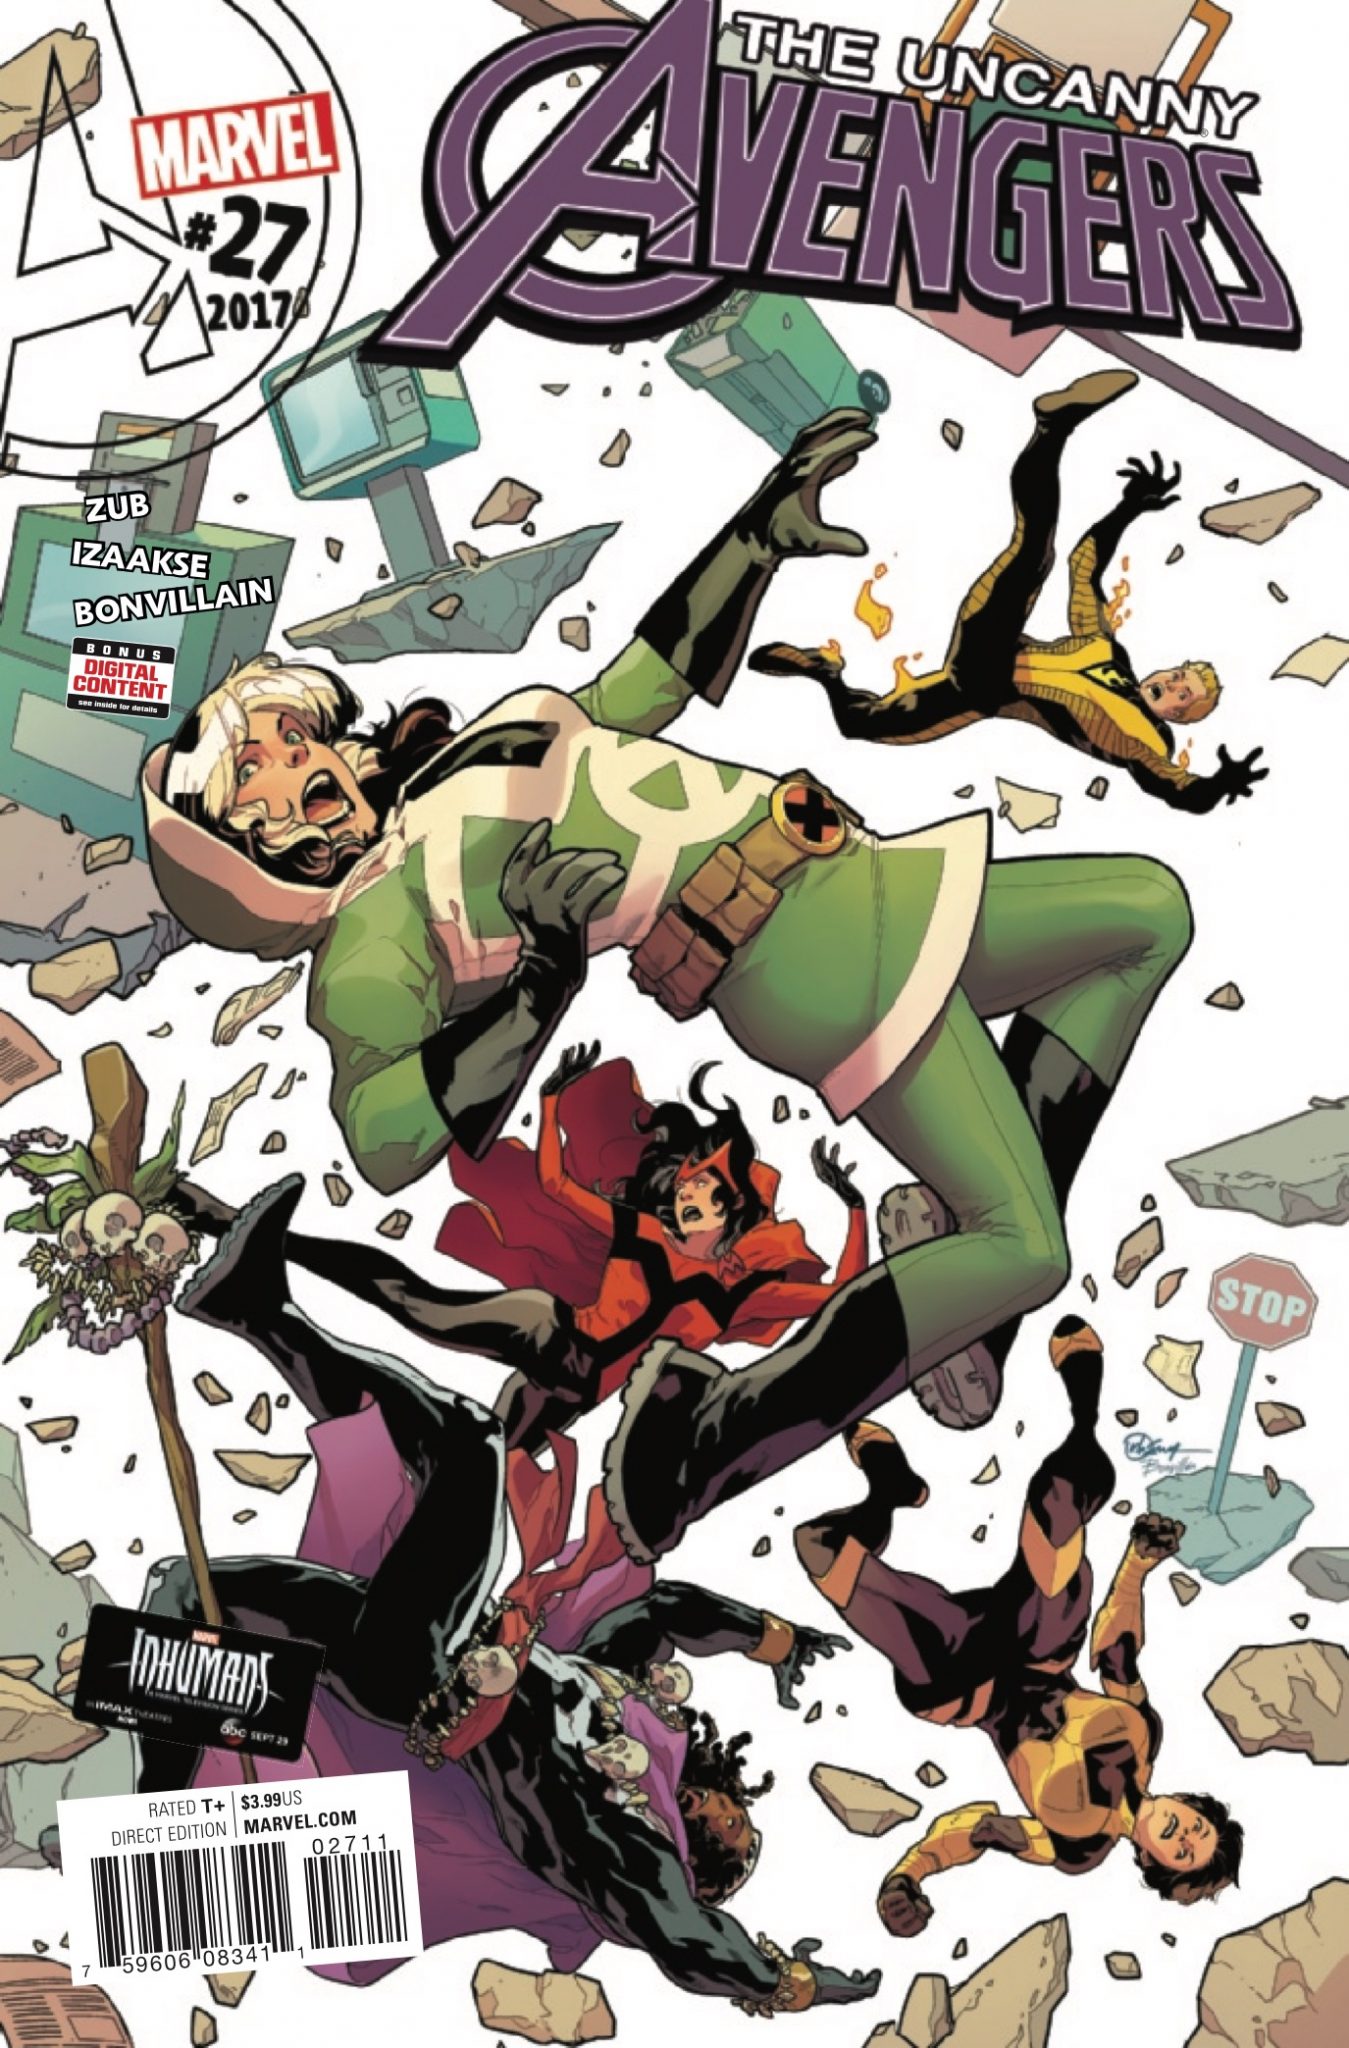 Marvel Preview: Uncanny Avengers #27